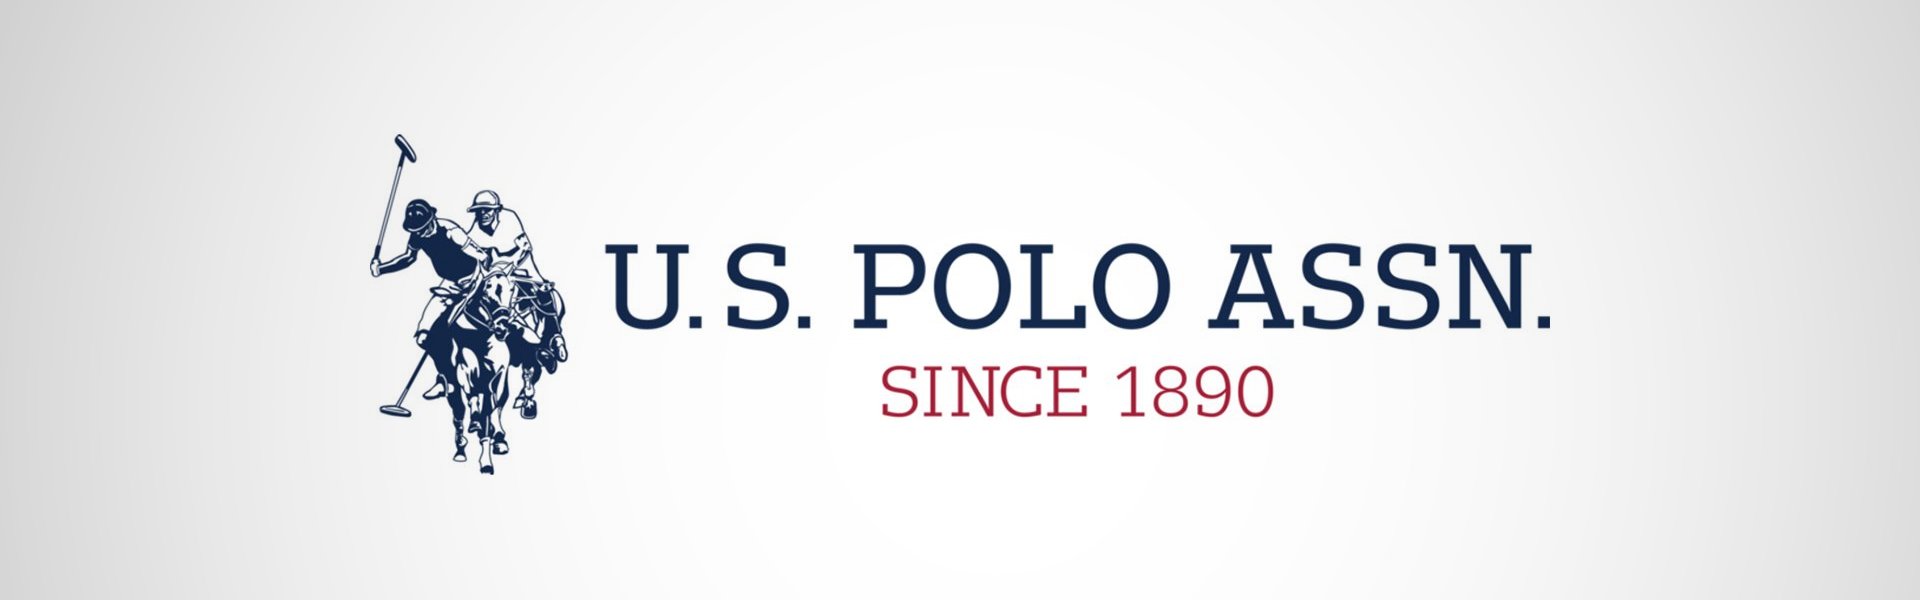 U.S. Polo miesten kengät Altena, oranssi-harmaa U. S. Polo Assn.